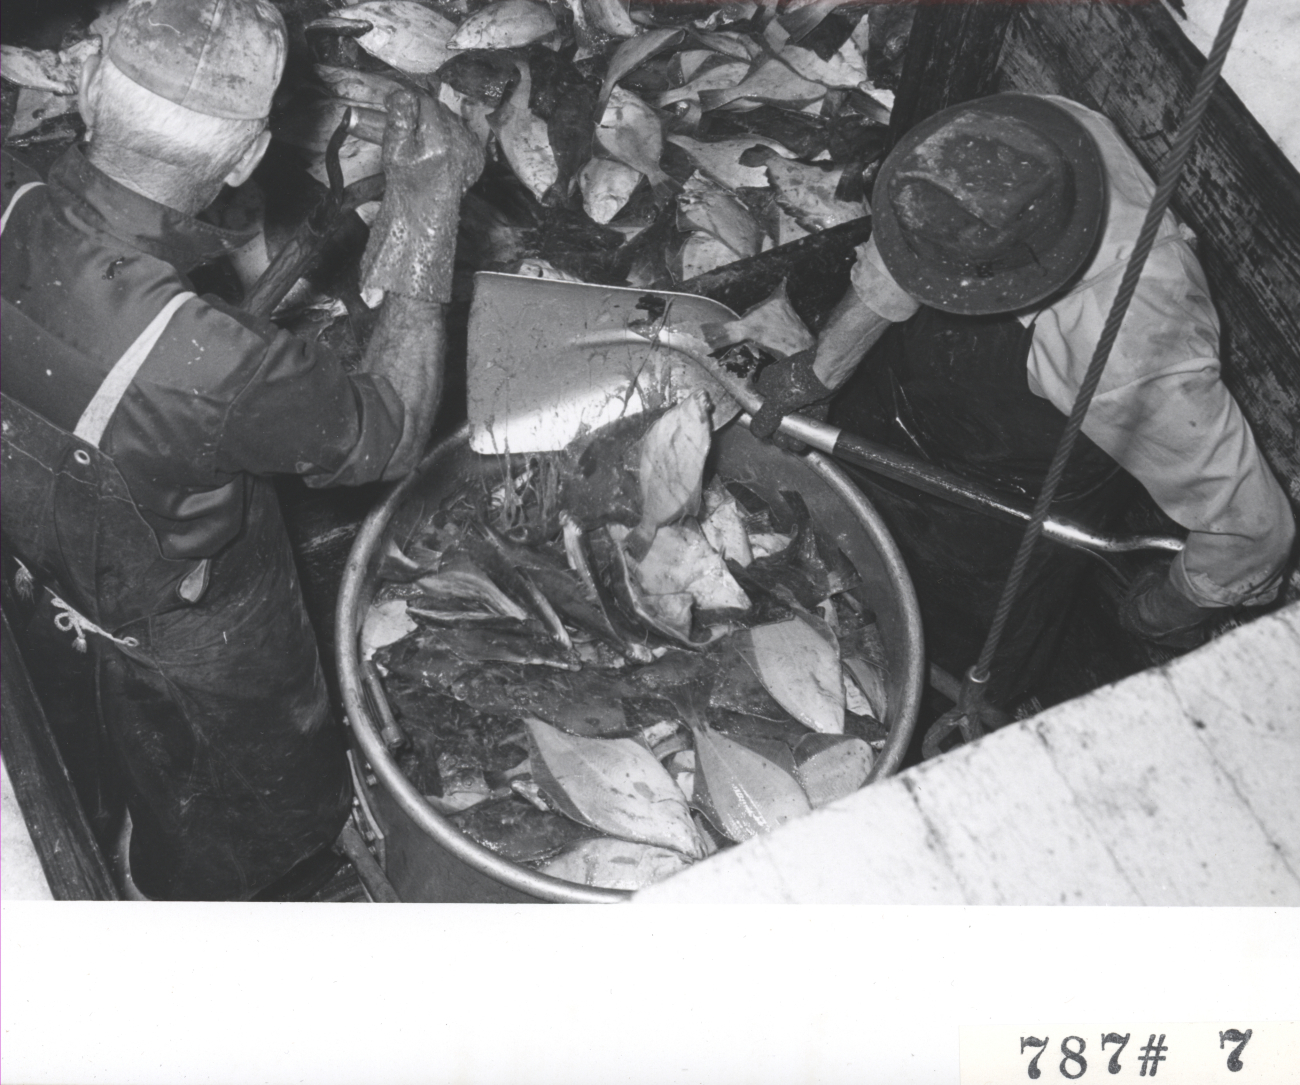 Shoveling fish into buckets for offloading F/V LEMES and processing atEverett Fish Company